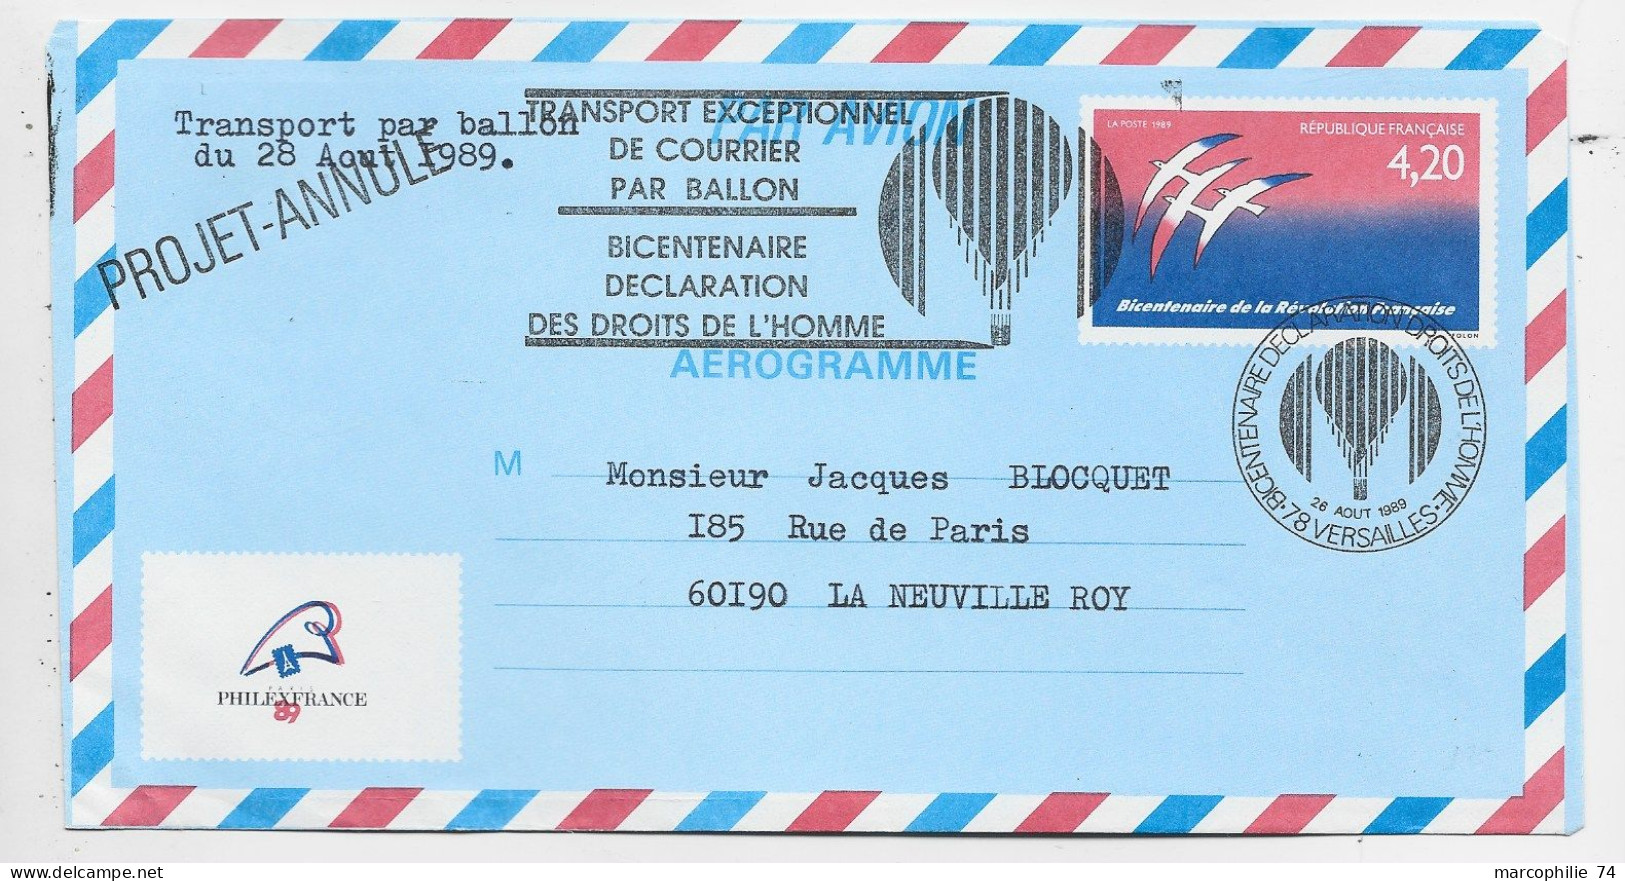 FRANCE AEROGRAMME 4.20 FOLON ENVELOPPE COVER TRANSPORT EXCEPTIONNEL PAR BALLON 1989 PHILEX PROJET ANNULE - Aerogrammi